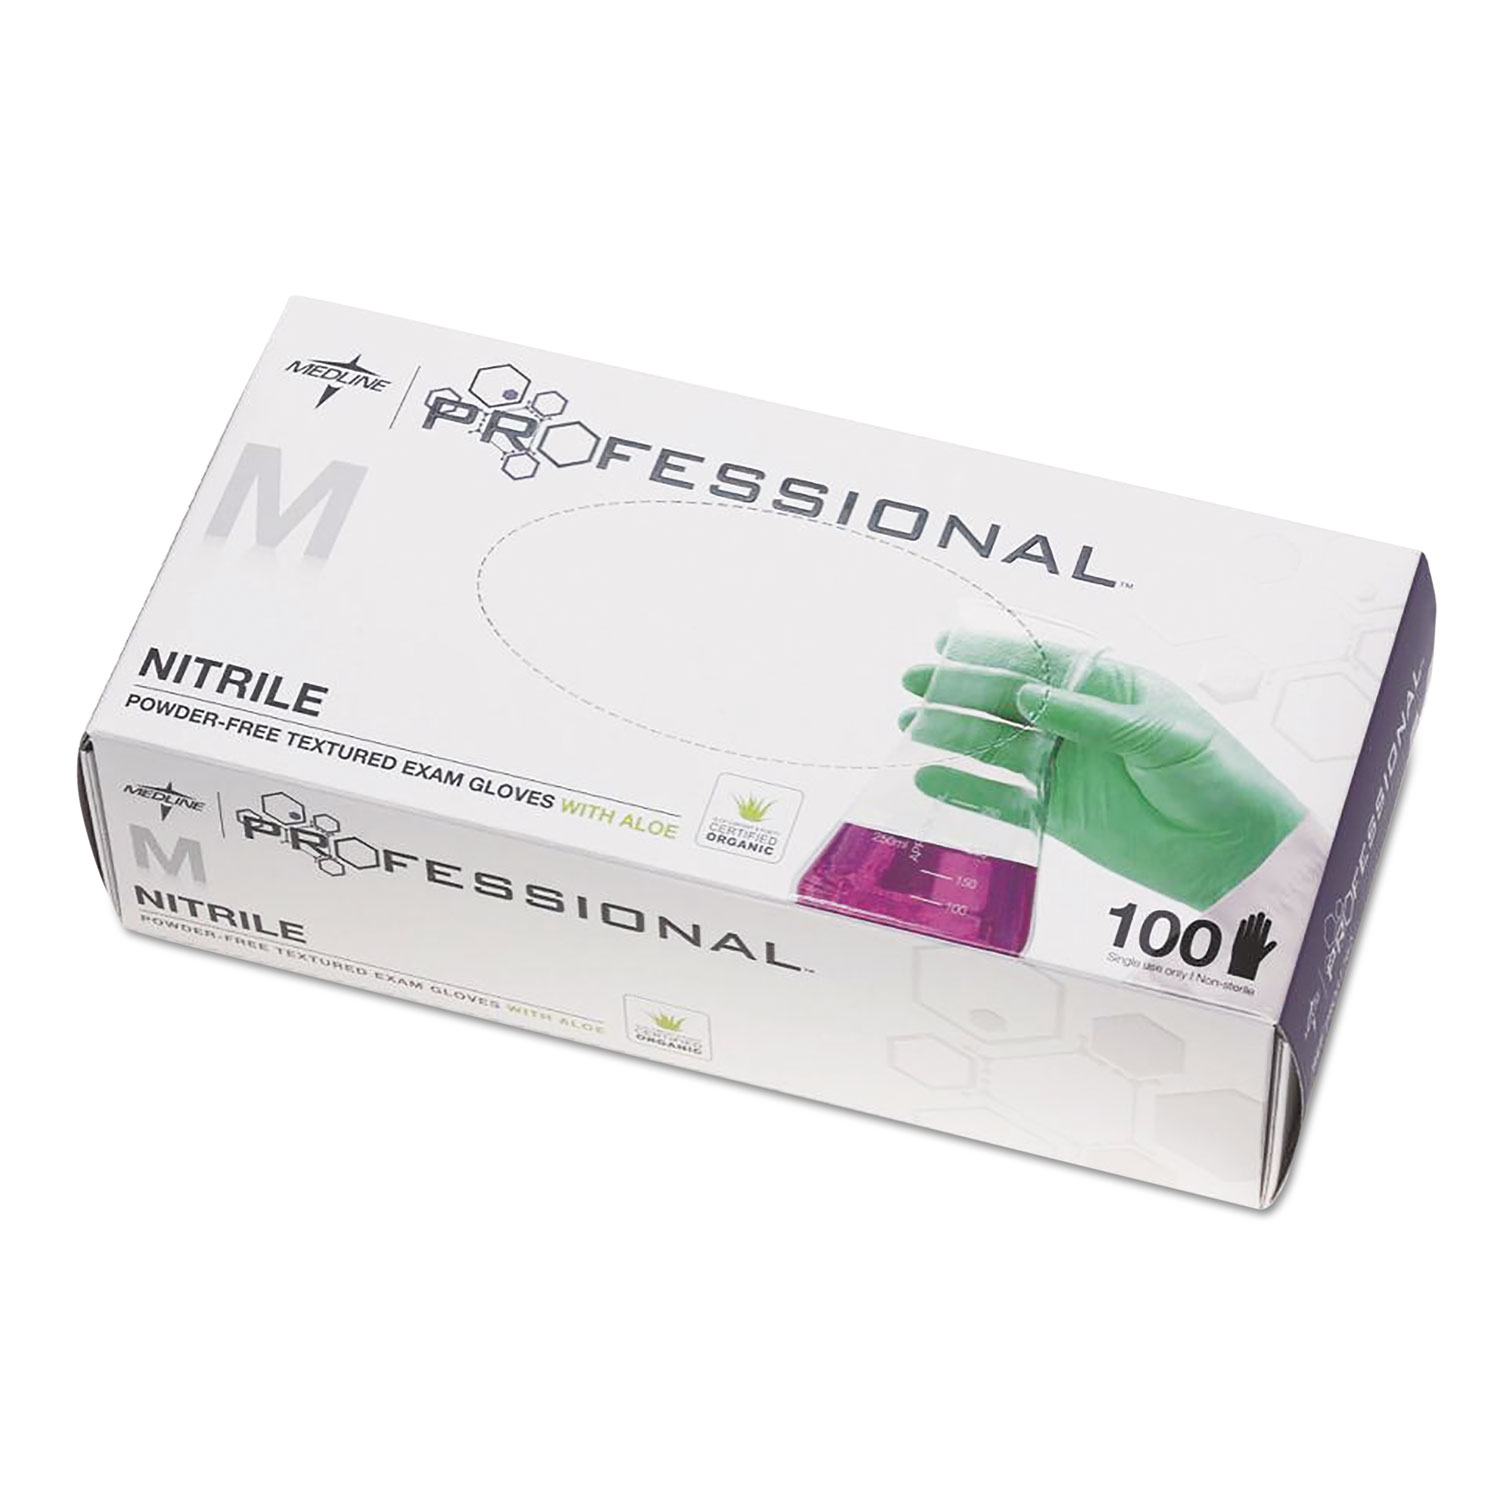  Medline PRO31762 Professional Nitrile Exam Gloves with Aloe, Medium, Green, 100/Box (MIIPRO31762) 